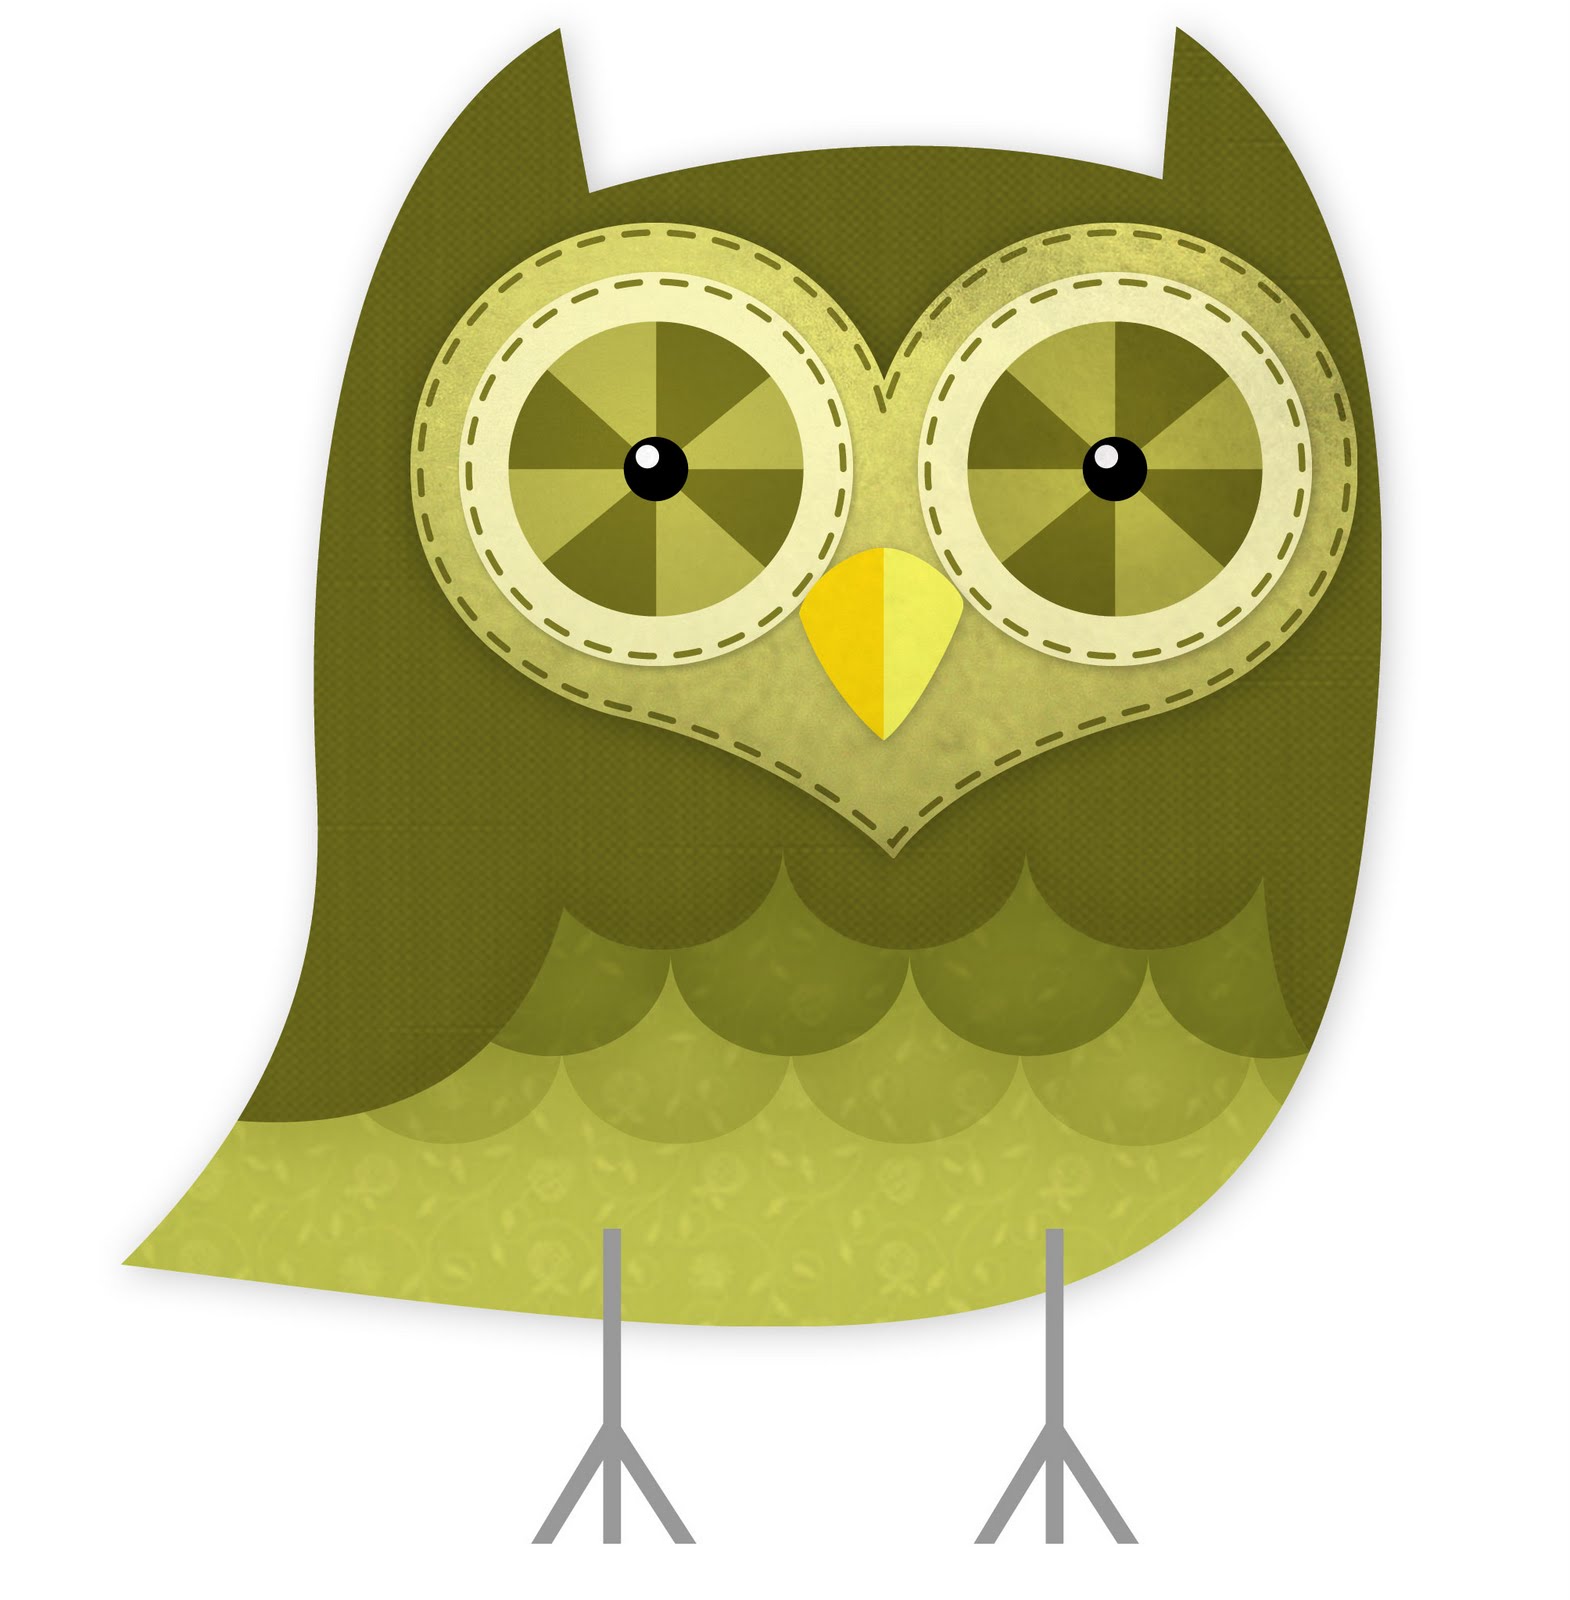 Owl Cartoon Image